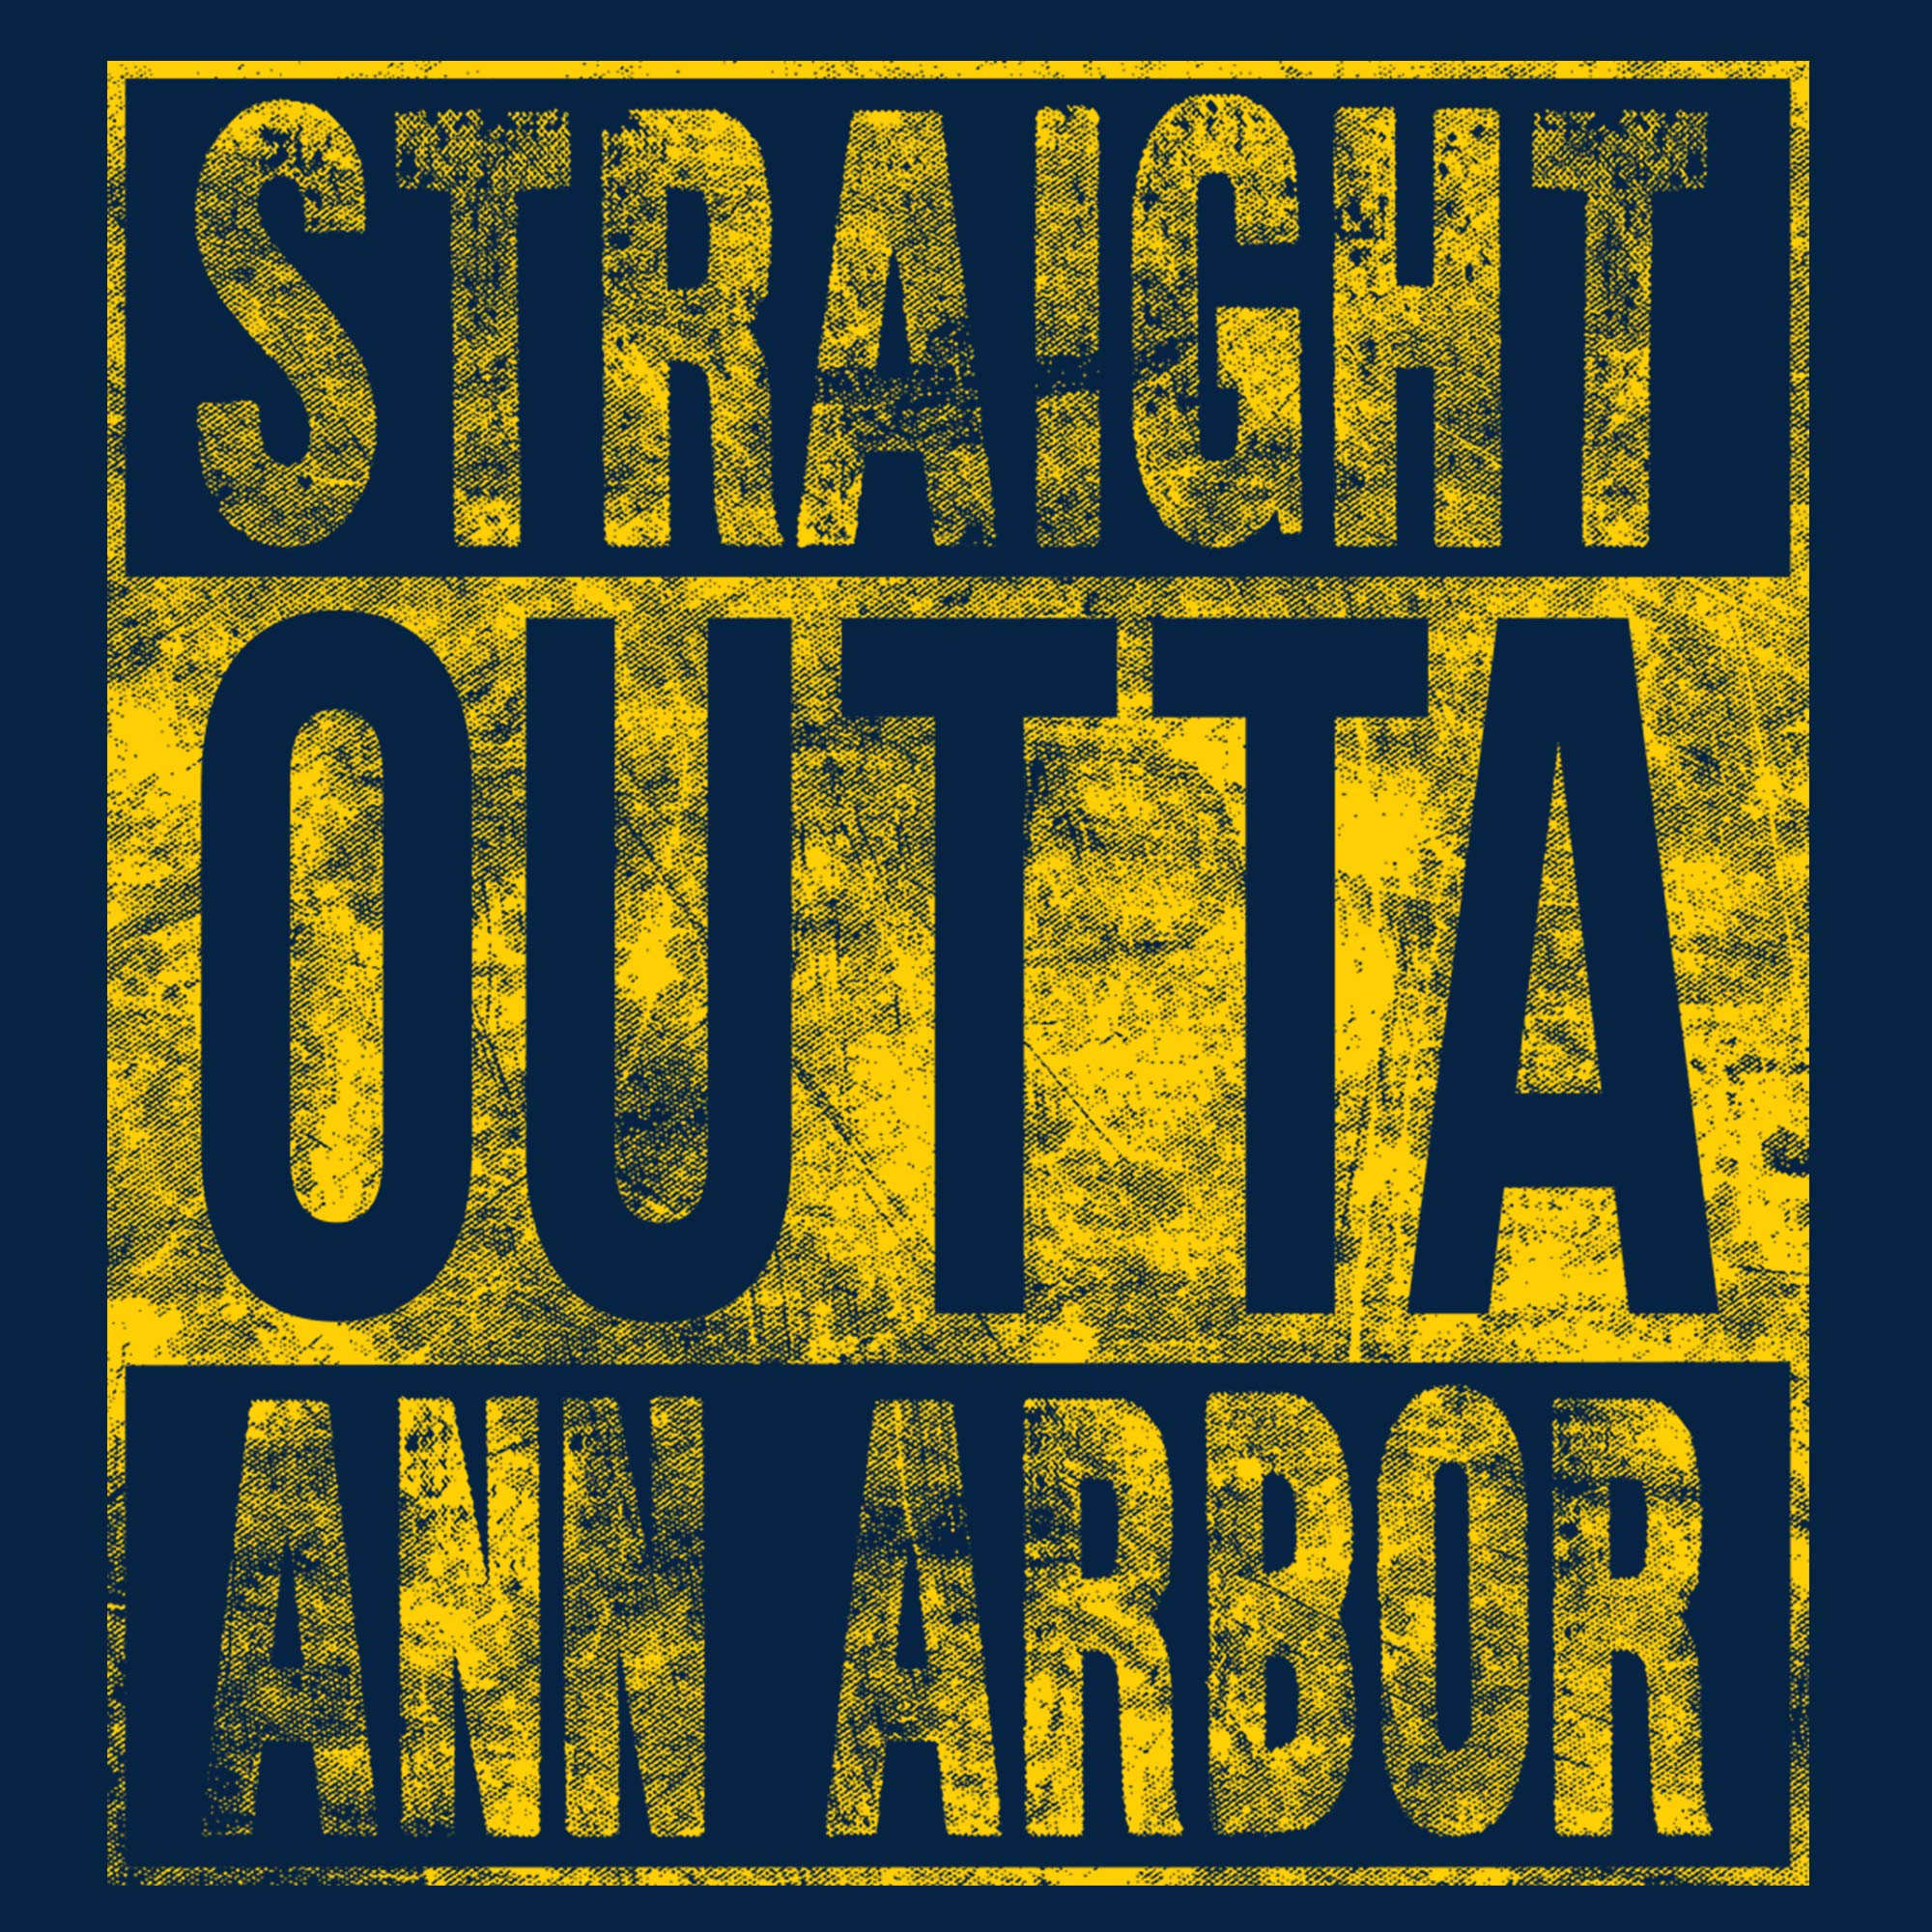 Straight Outta Ann Arbor Basic Cotton T-Shirt - 3X-Large - Navy